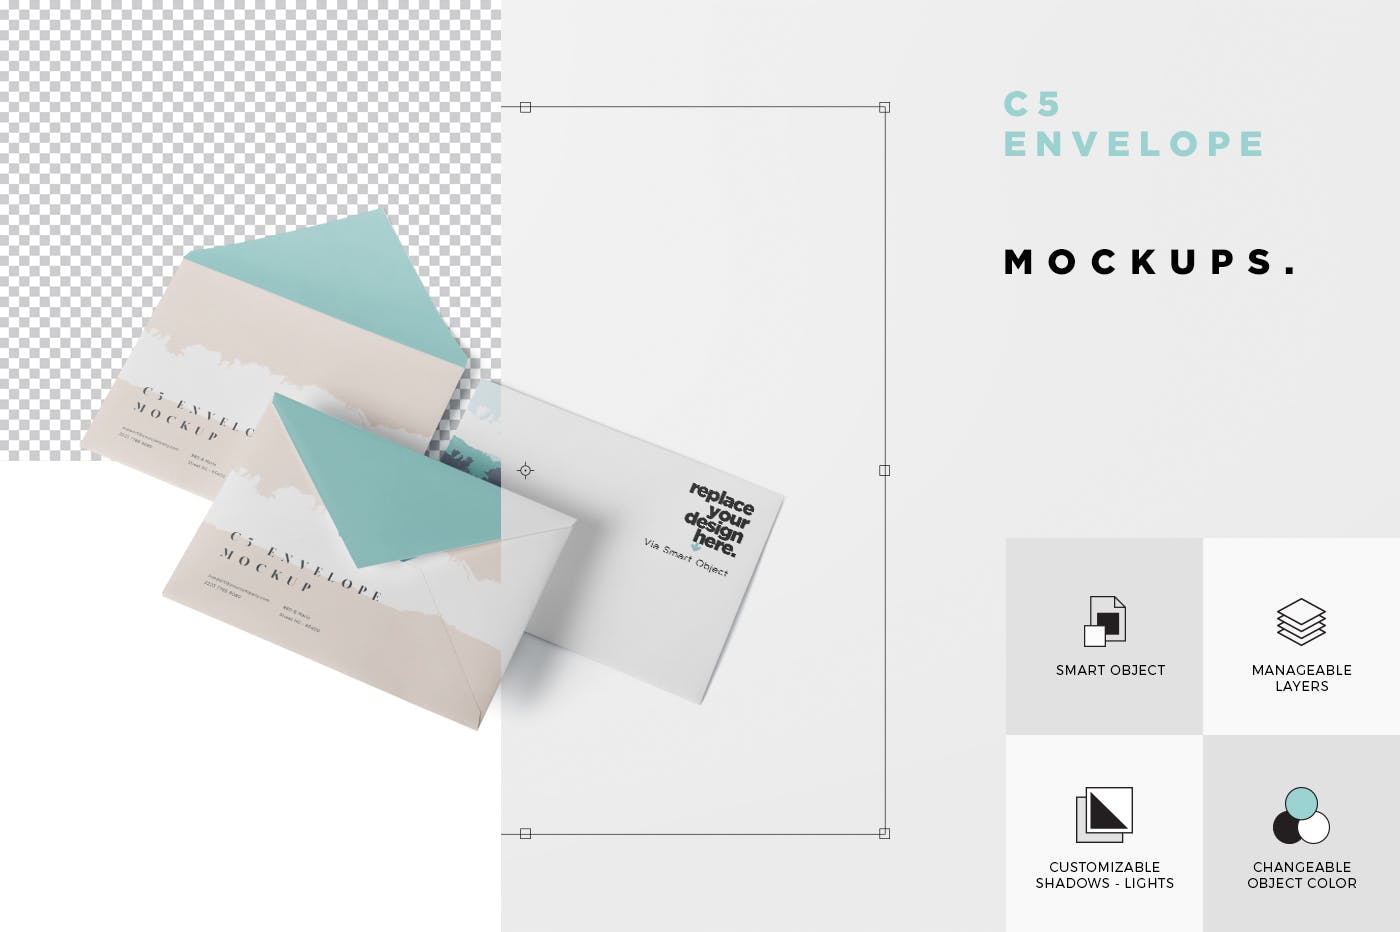 C5规格企业信封设计效果图第一素材精选 Envelope C5 Mock-Up Set插图(5)